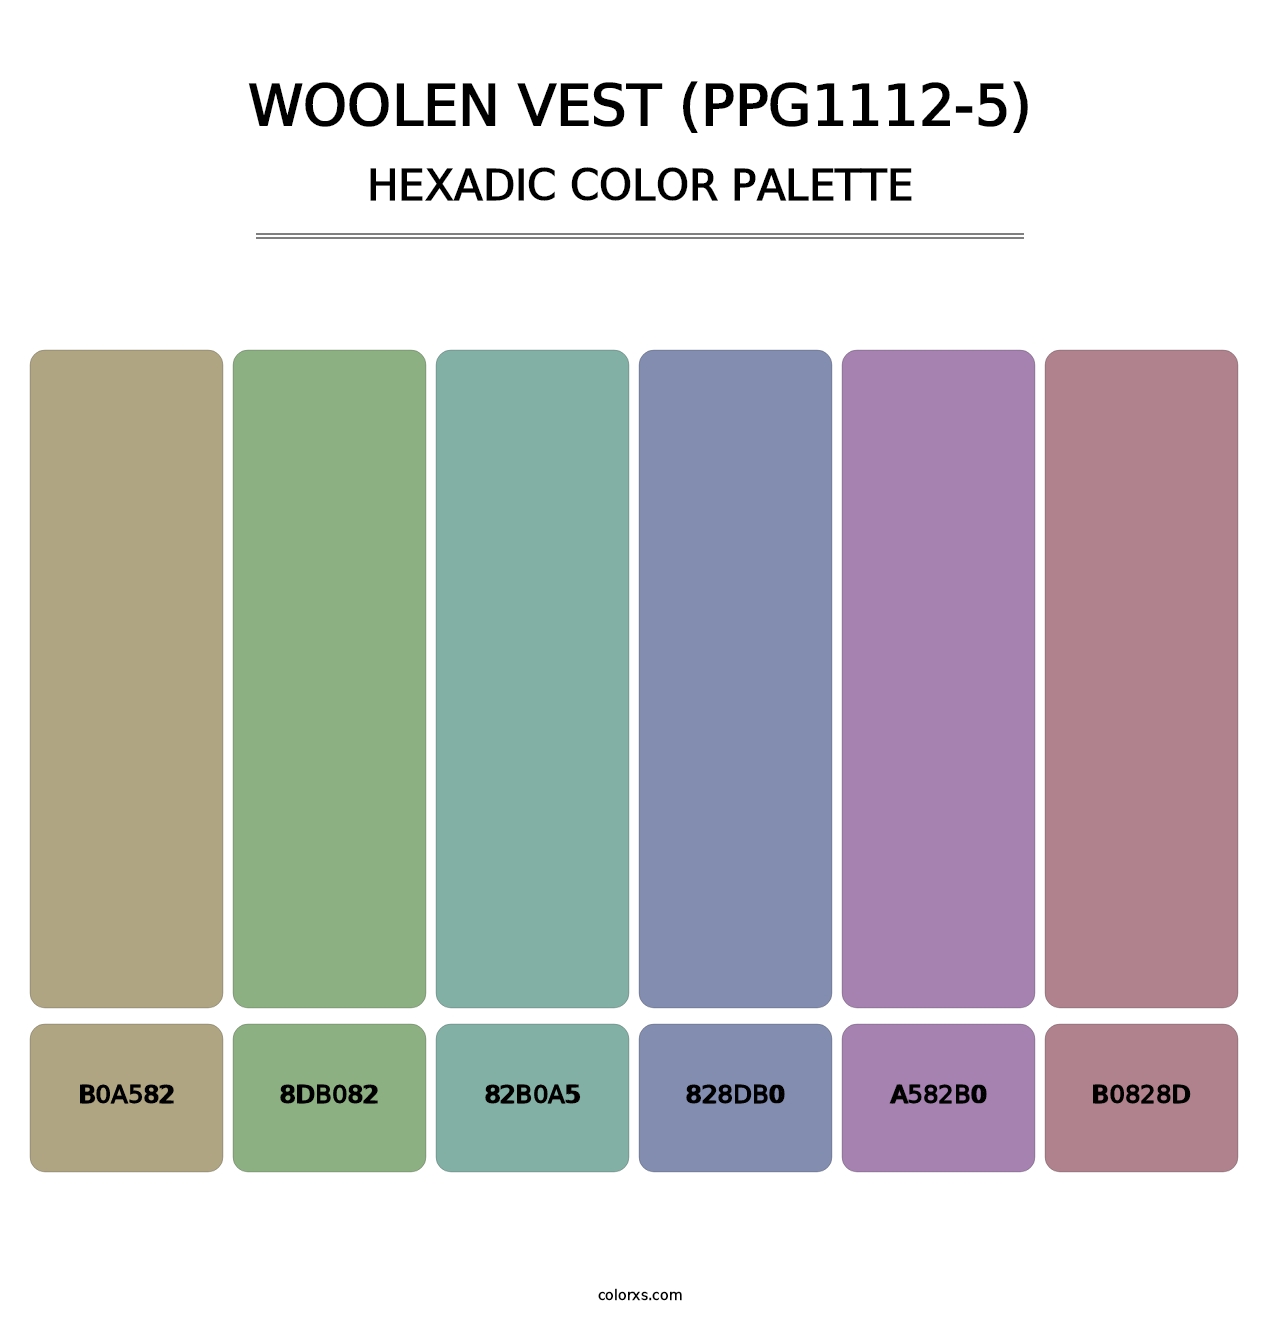 Woolen Vest (PPG1112-5) - Hexadic Color Palette